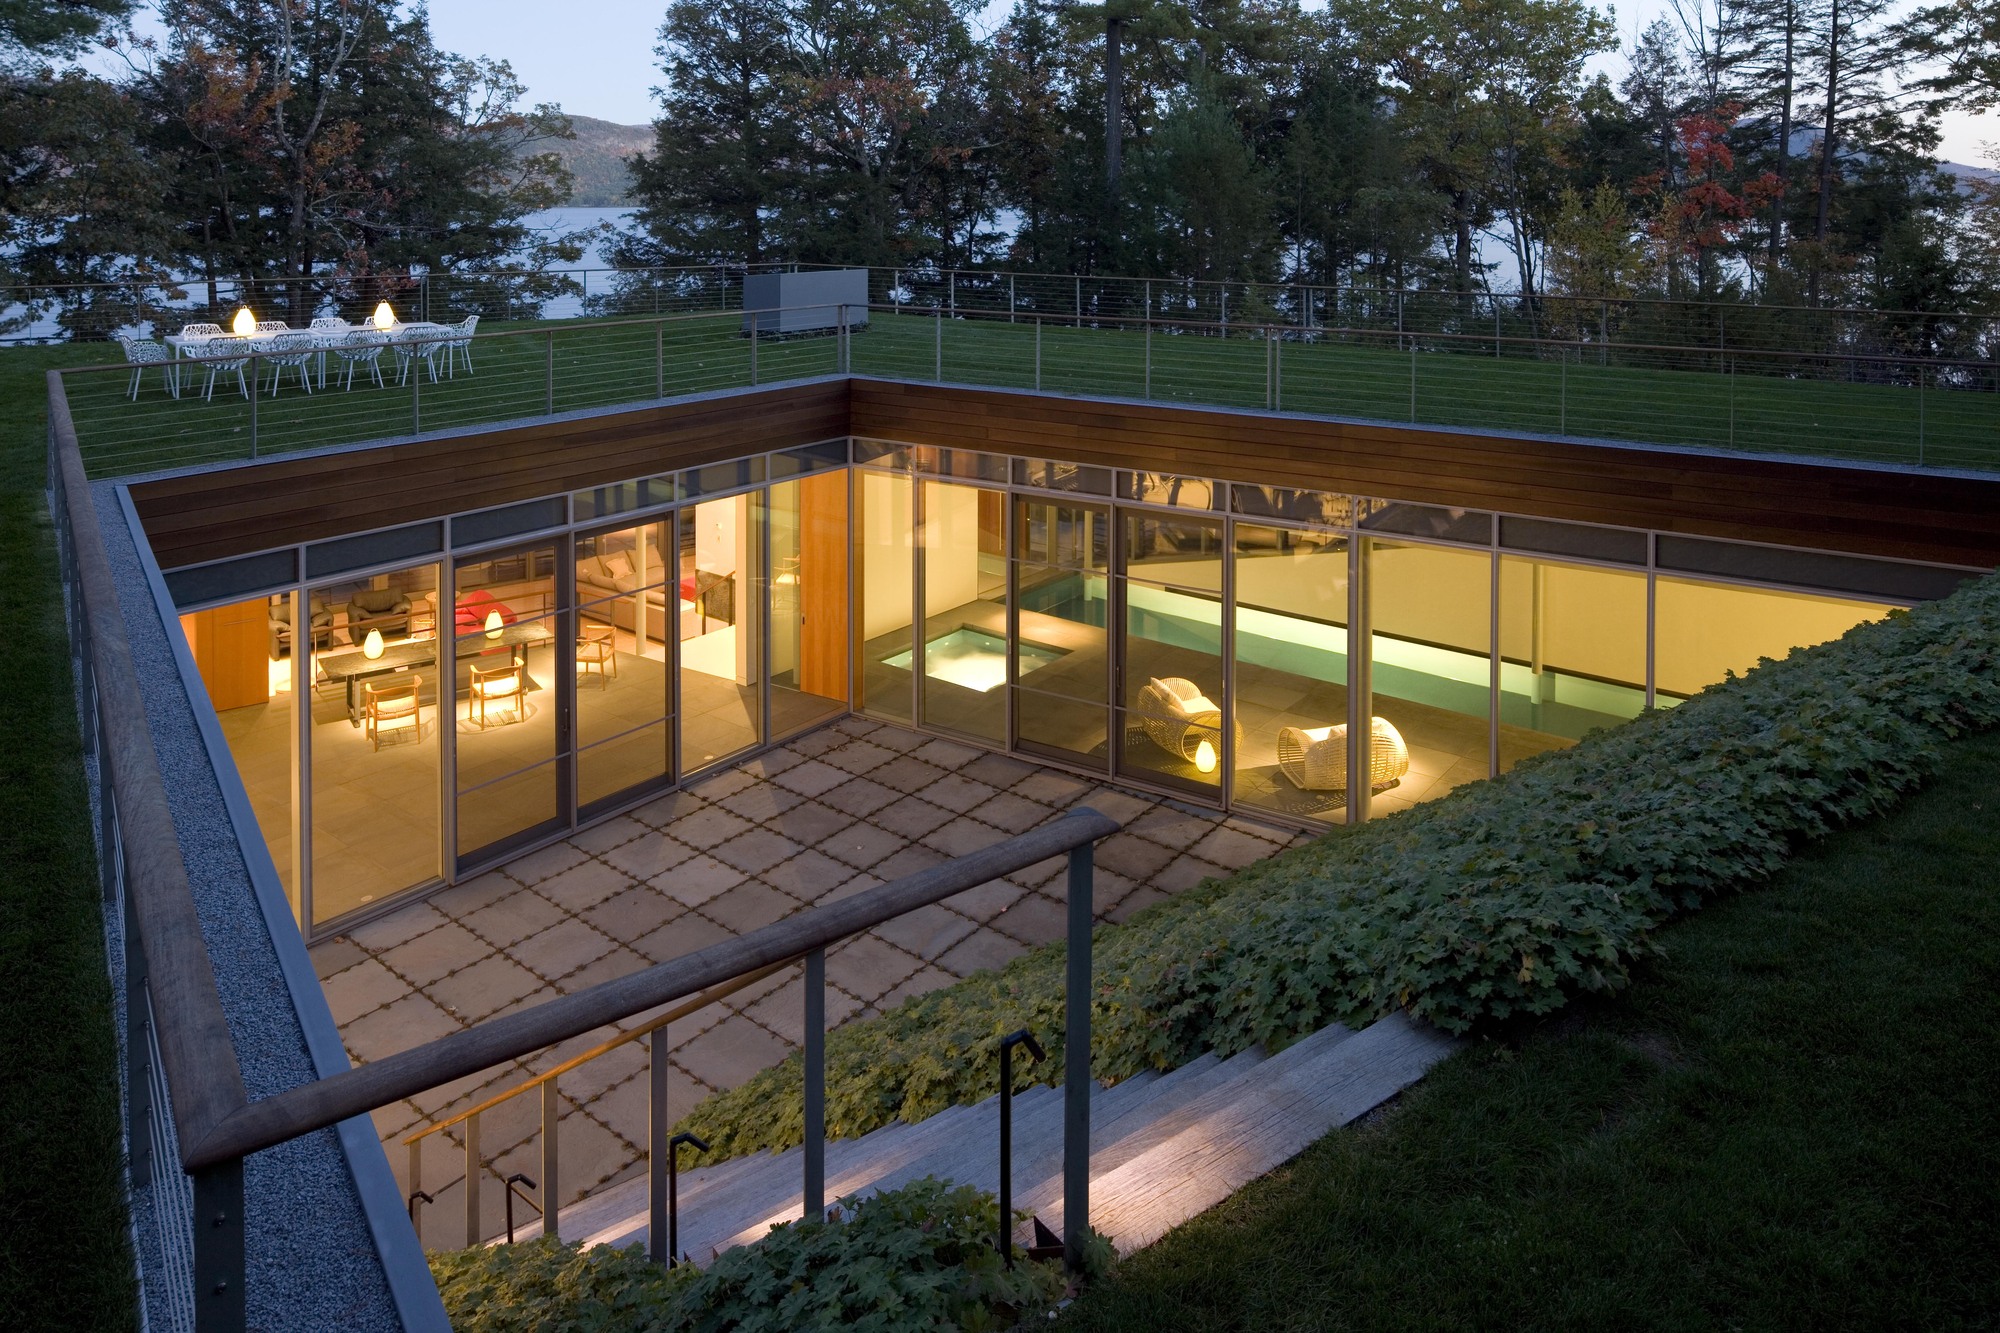 Design Inspiration: The Modern Courtyard House - Studio MM Architect